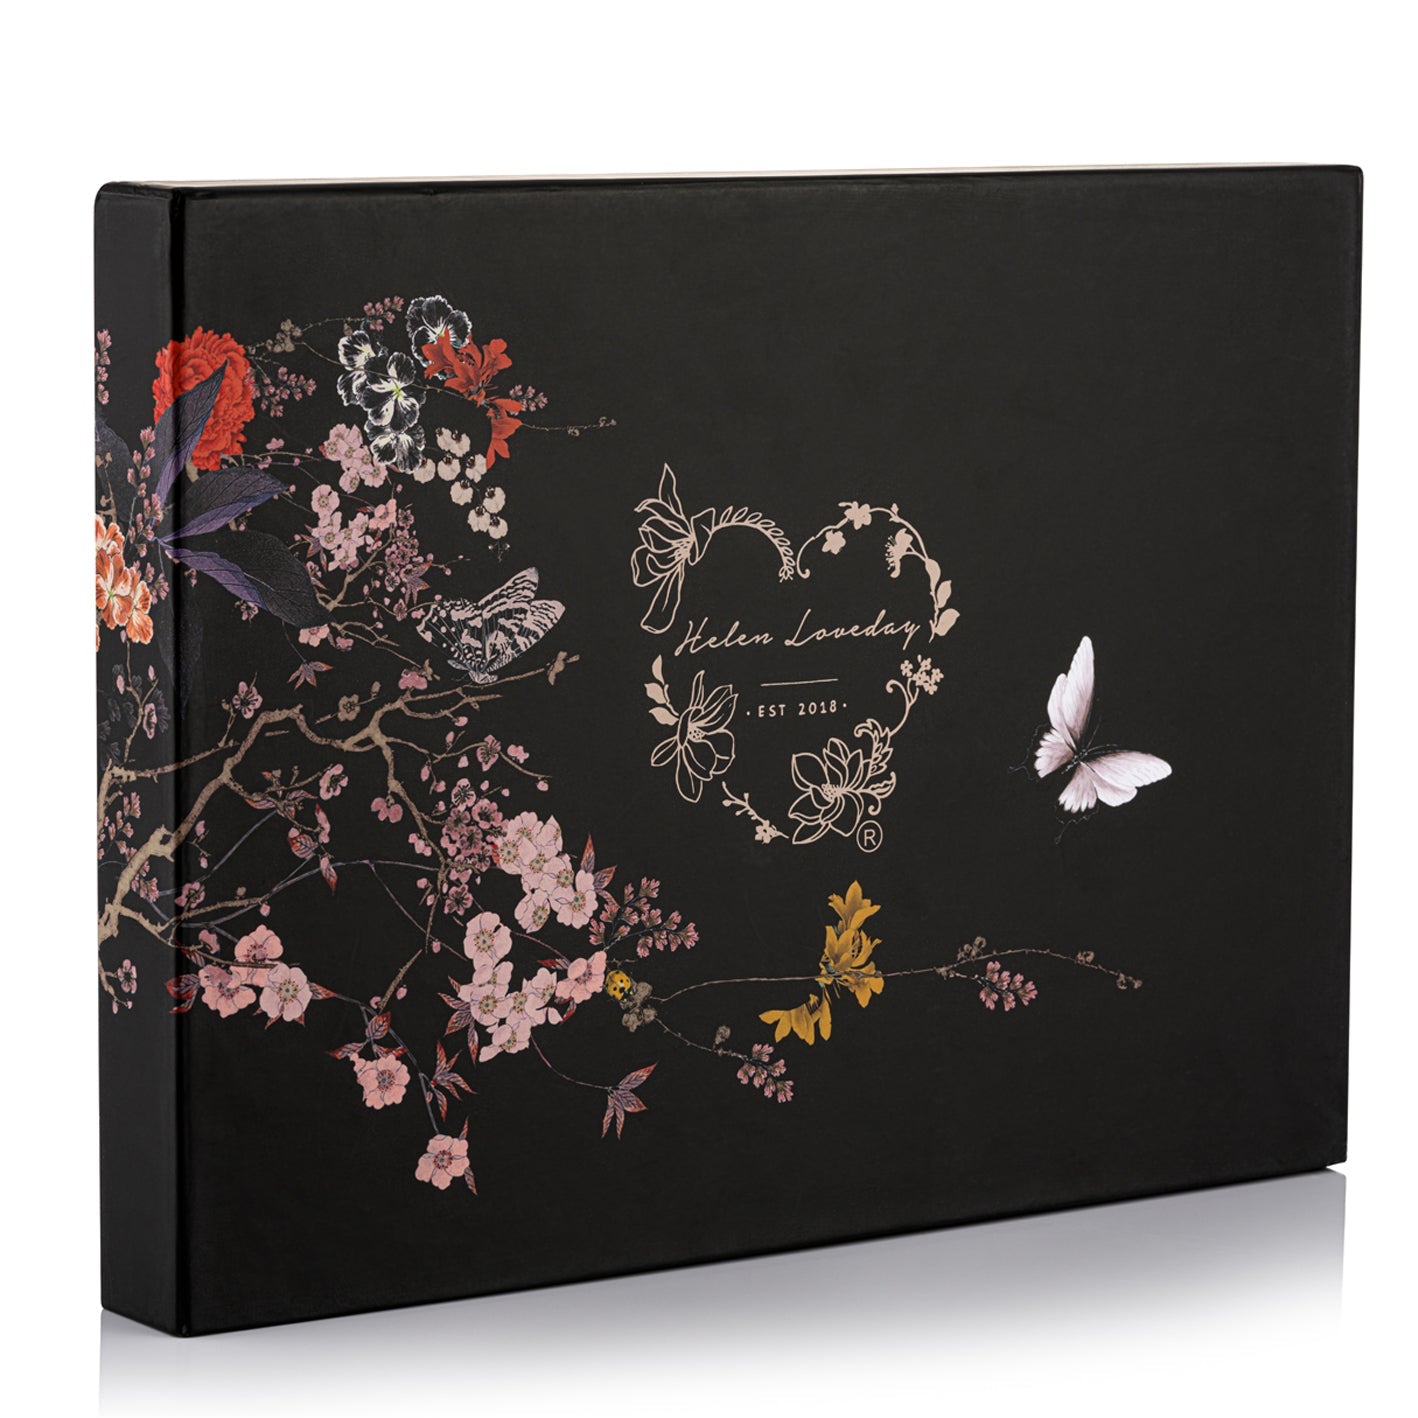 Pure Silk Kimono | Mint | Luxury Dressing Gown | Helen Loveday | Garden of Dreams kimono from Helen Loveday for 285